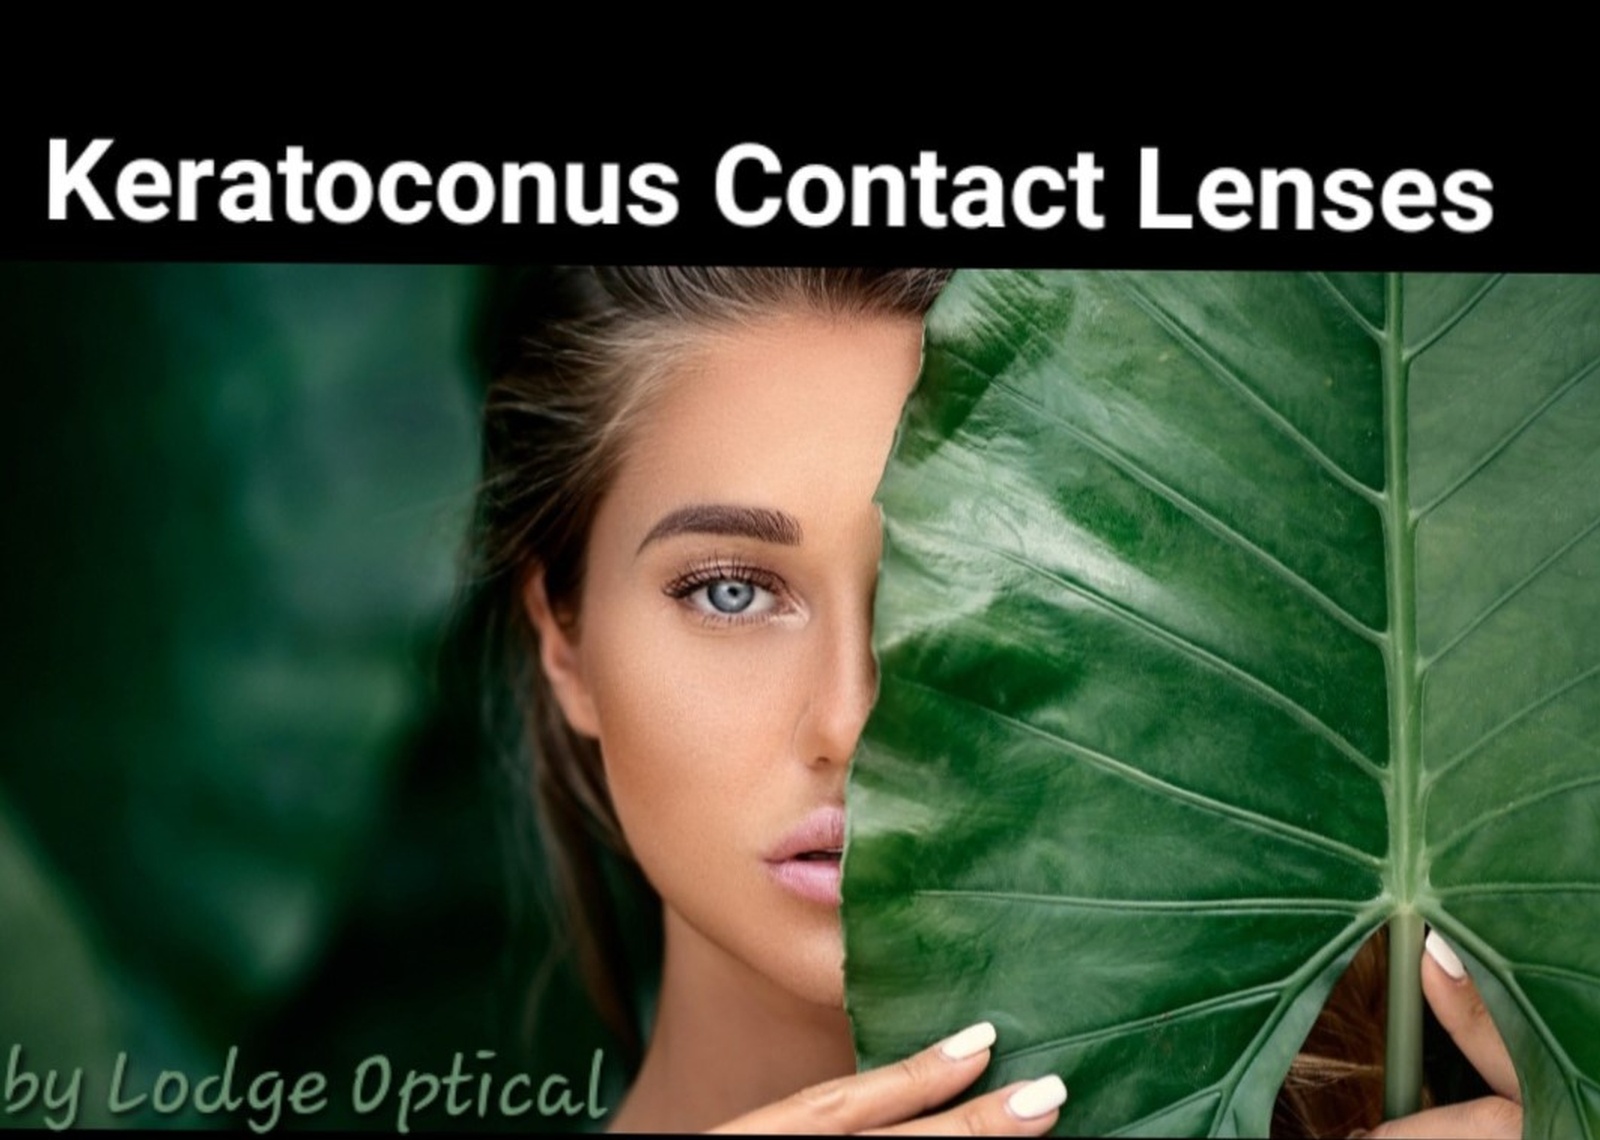 Keratoconus Contact Lenses